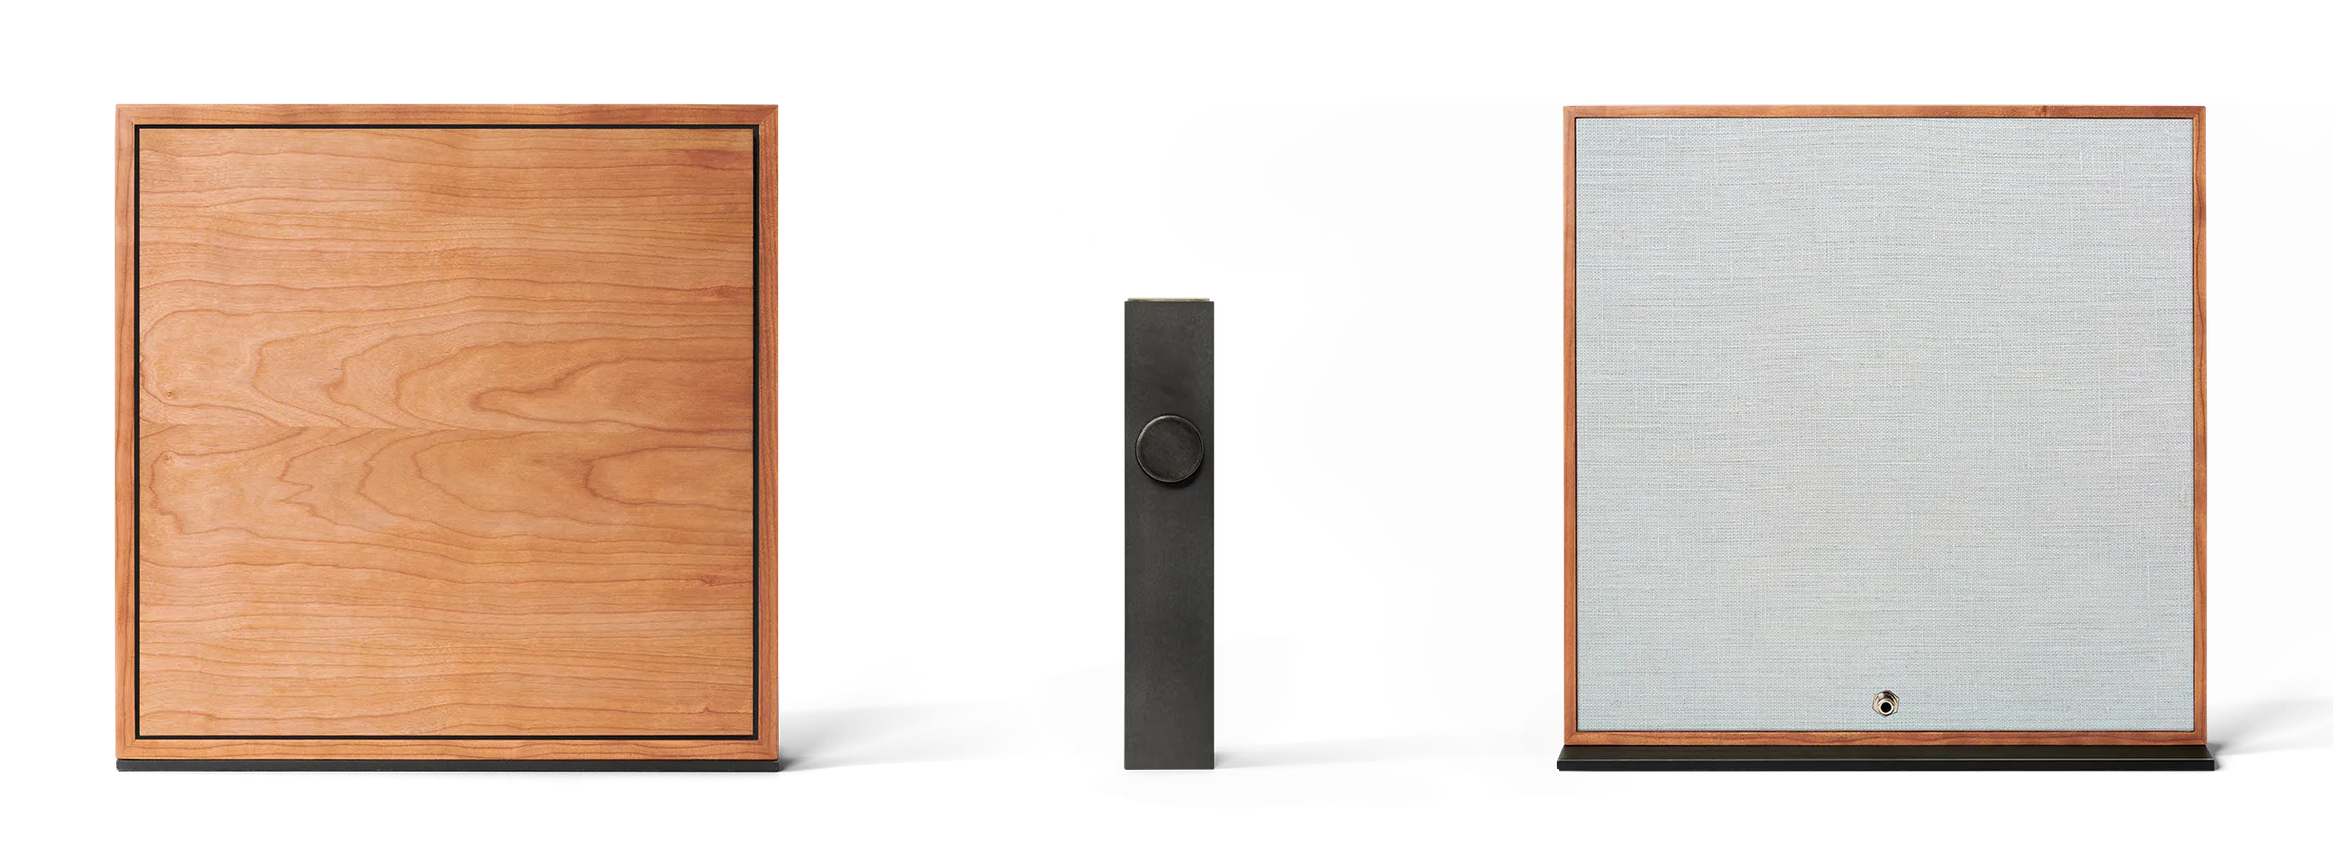 Oda Speaker System